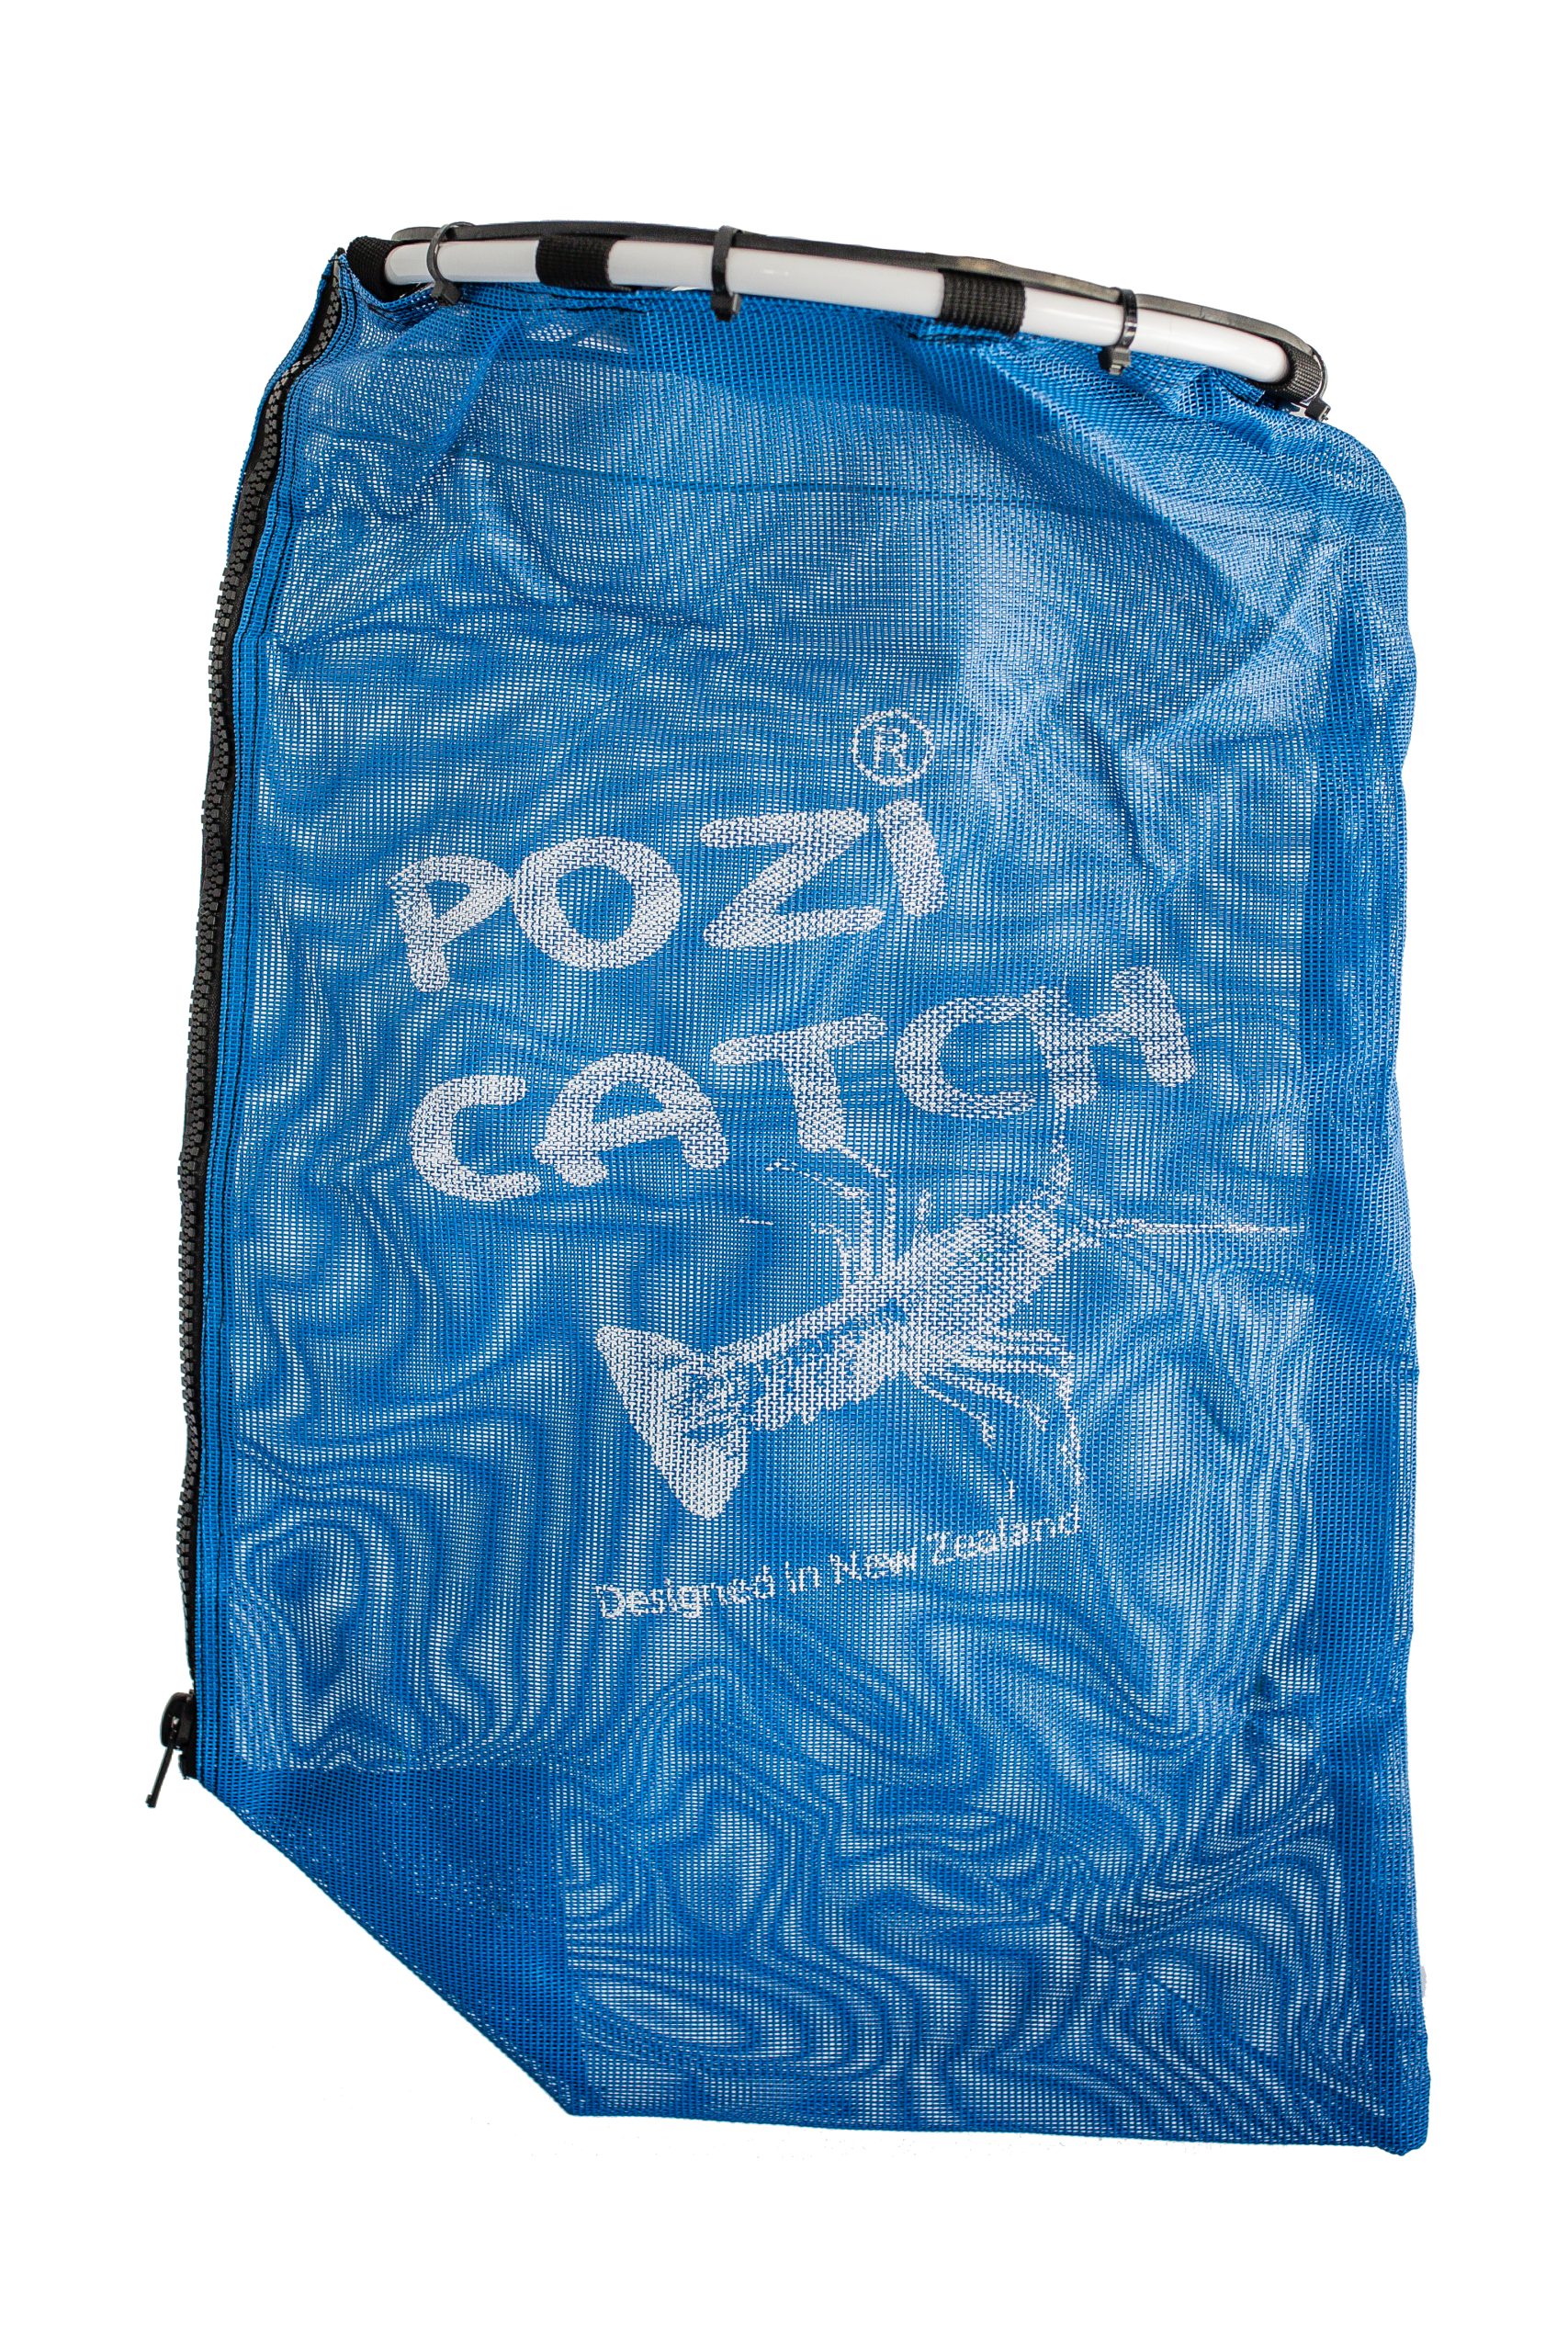 POZI catch bag – Divetech